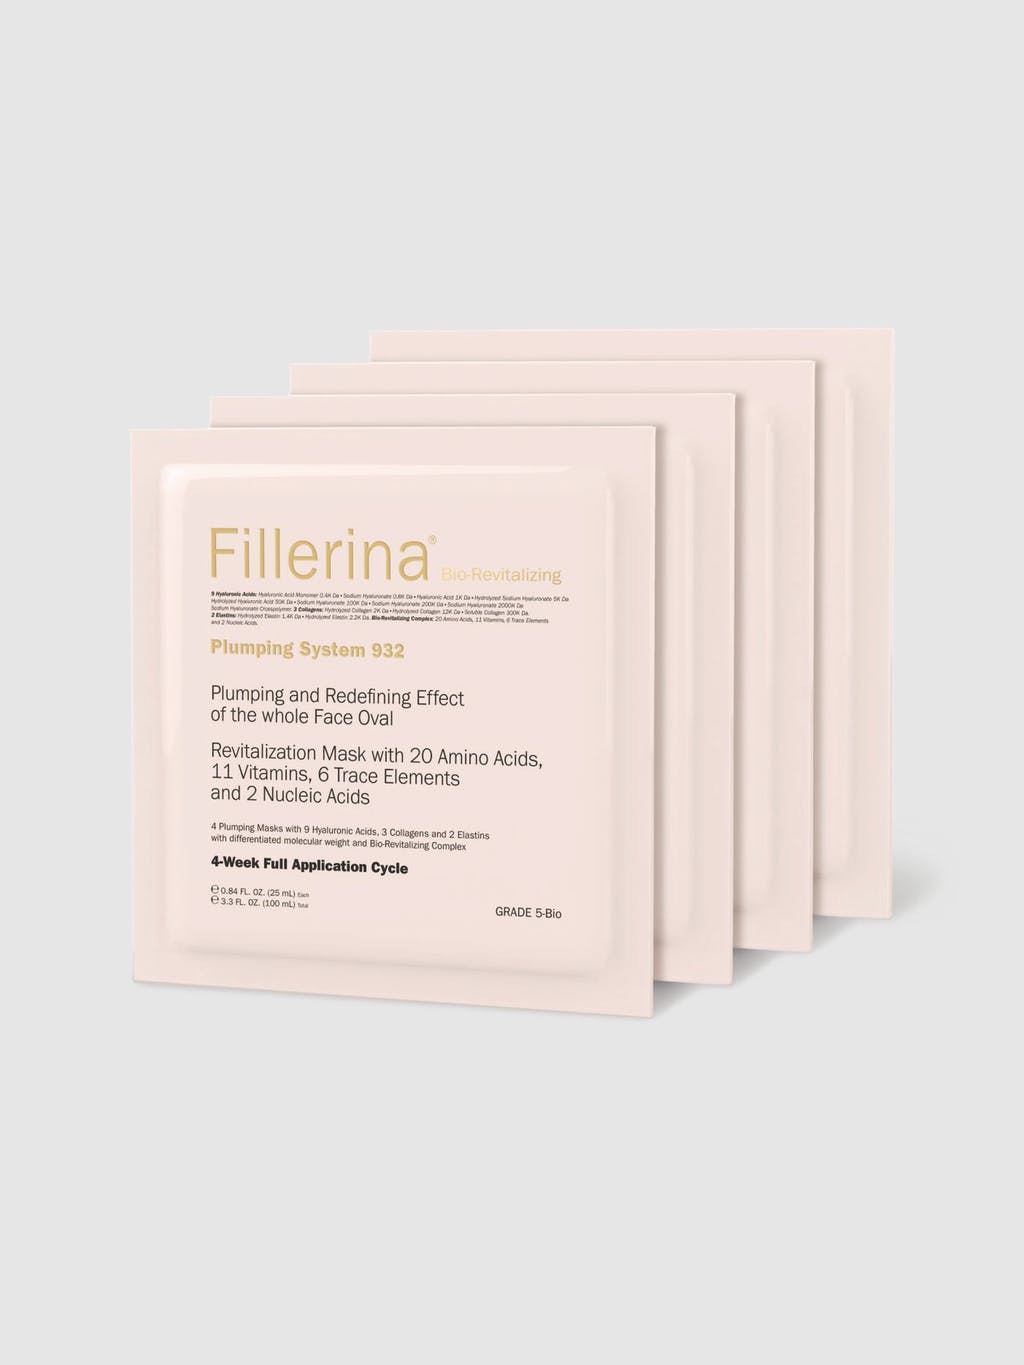 Fillerina® Plumping System 932 Bio-Revitalizing